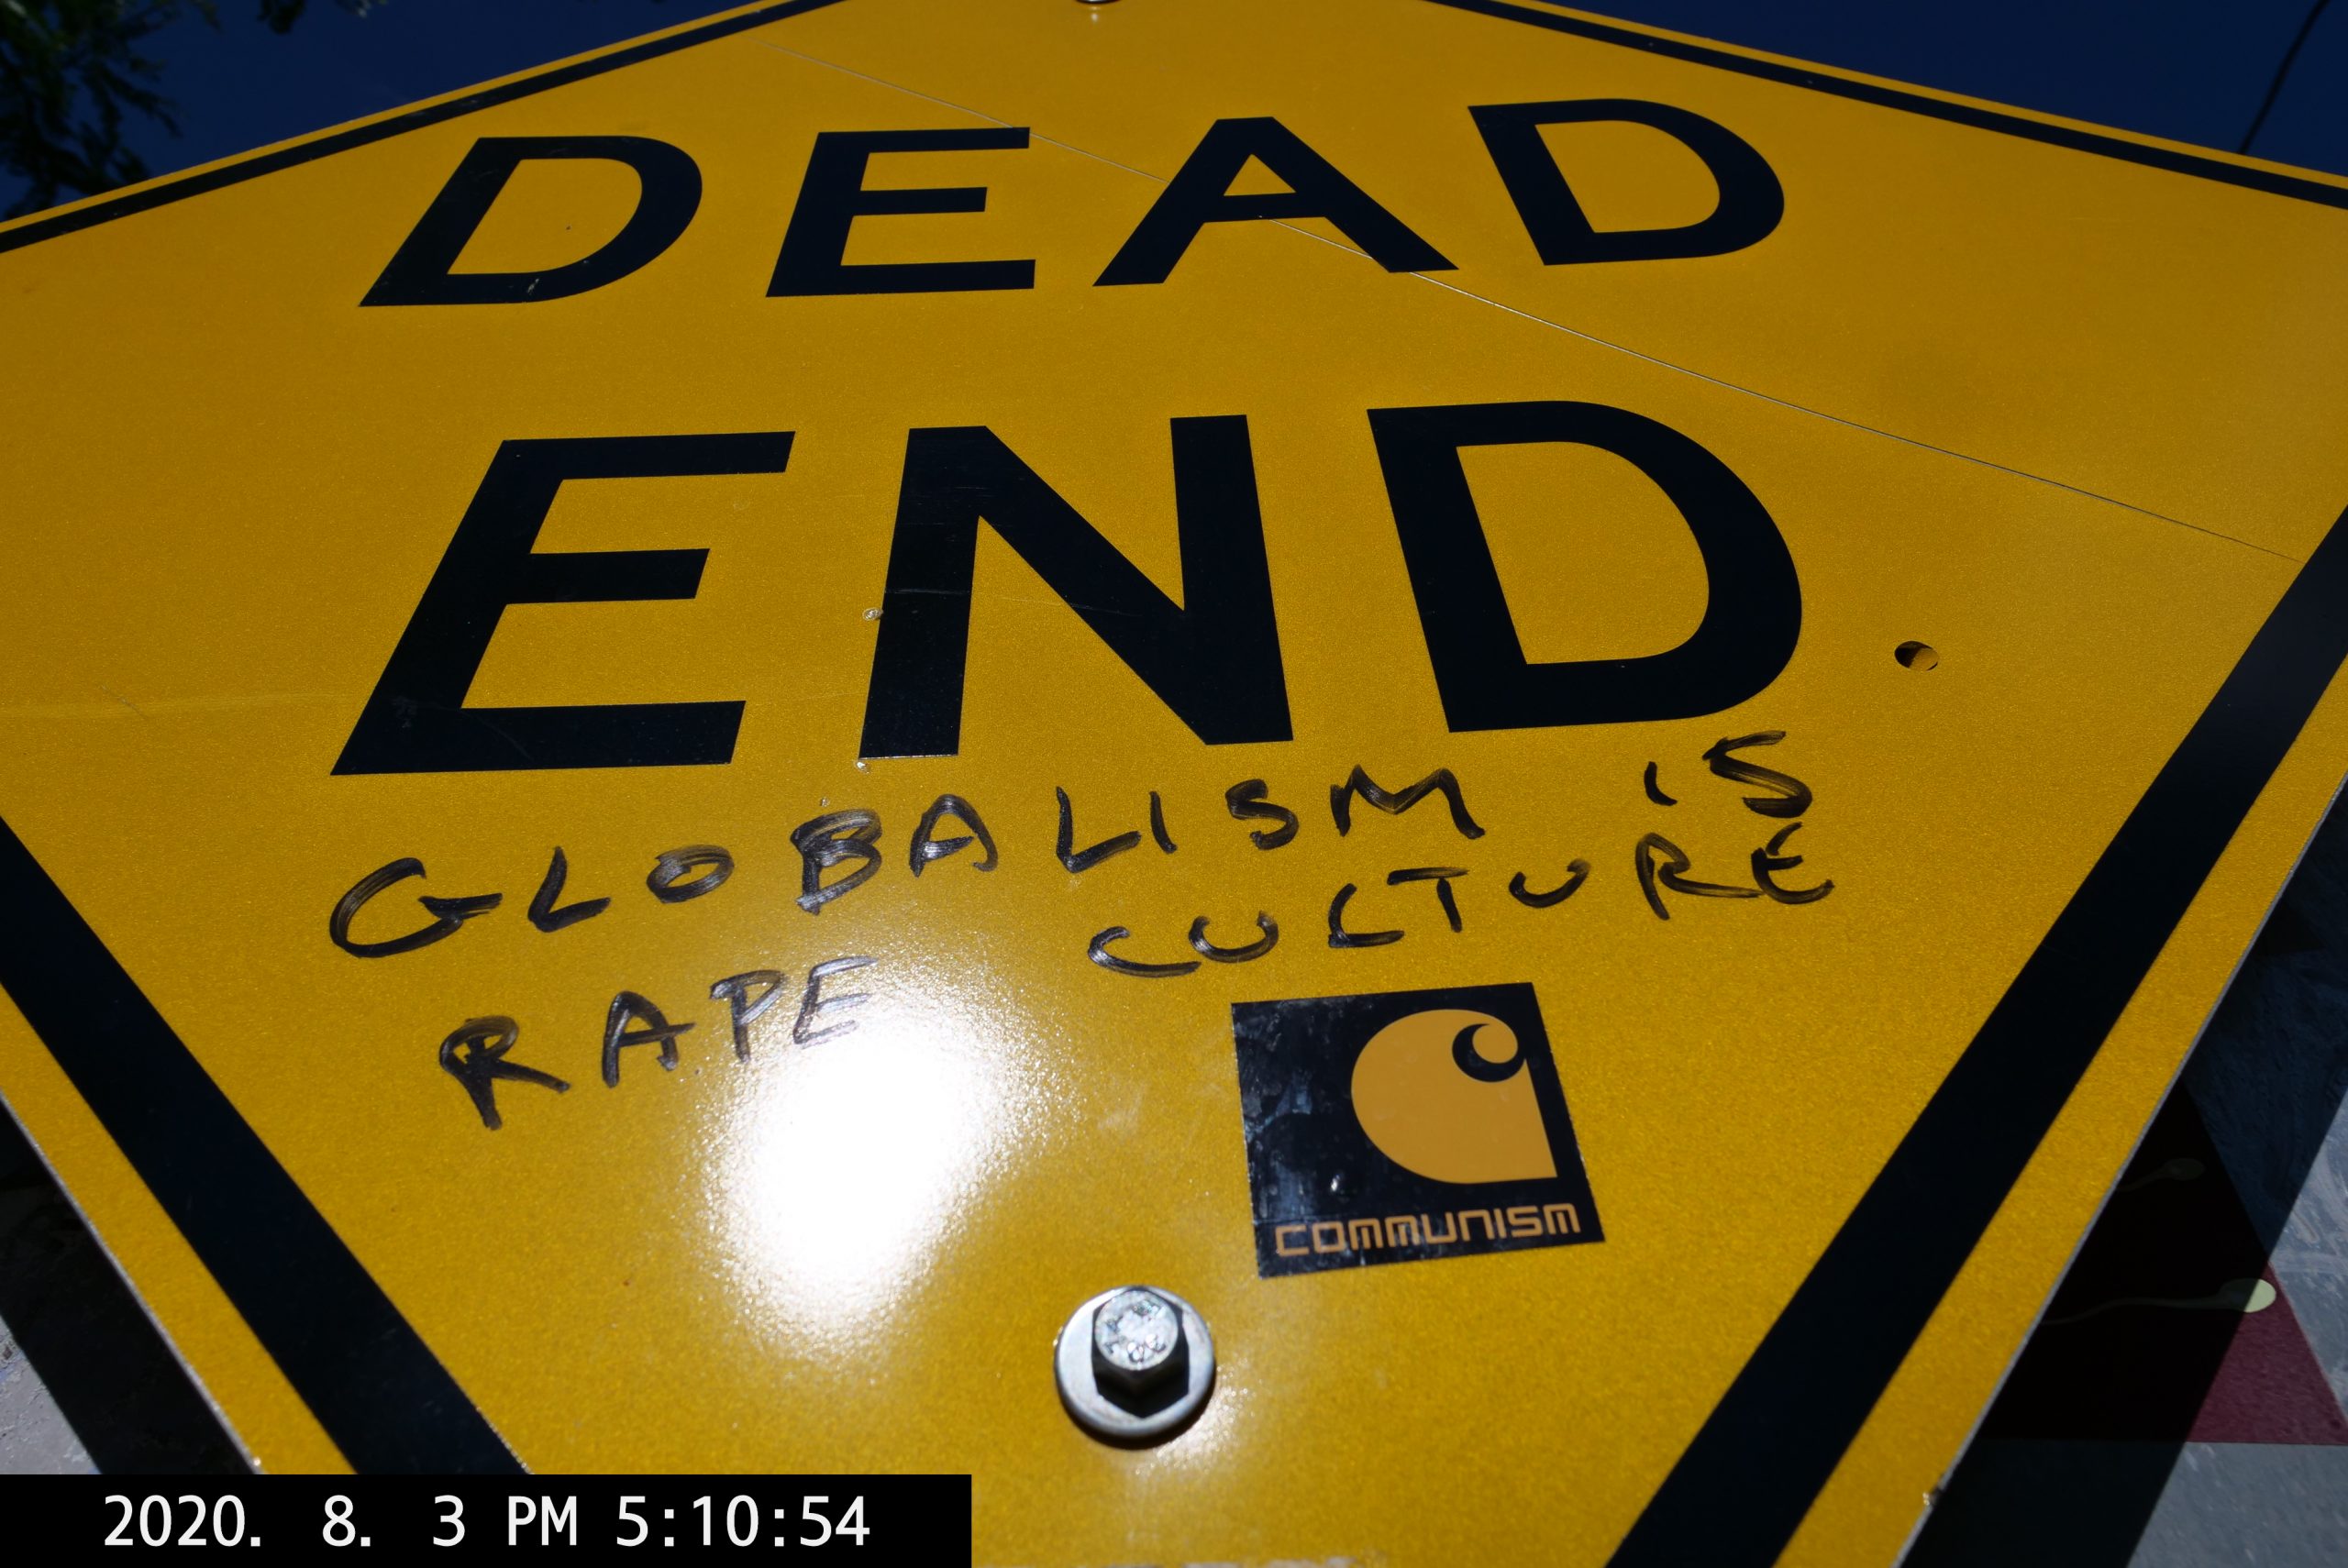 dead end globalism is rape culture sign yellow communism